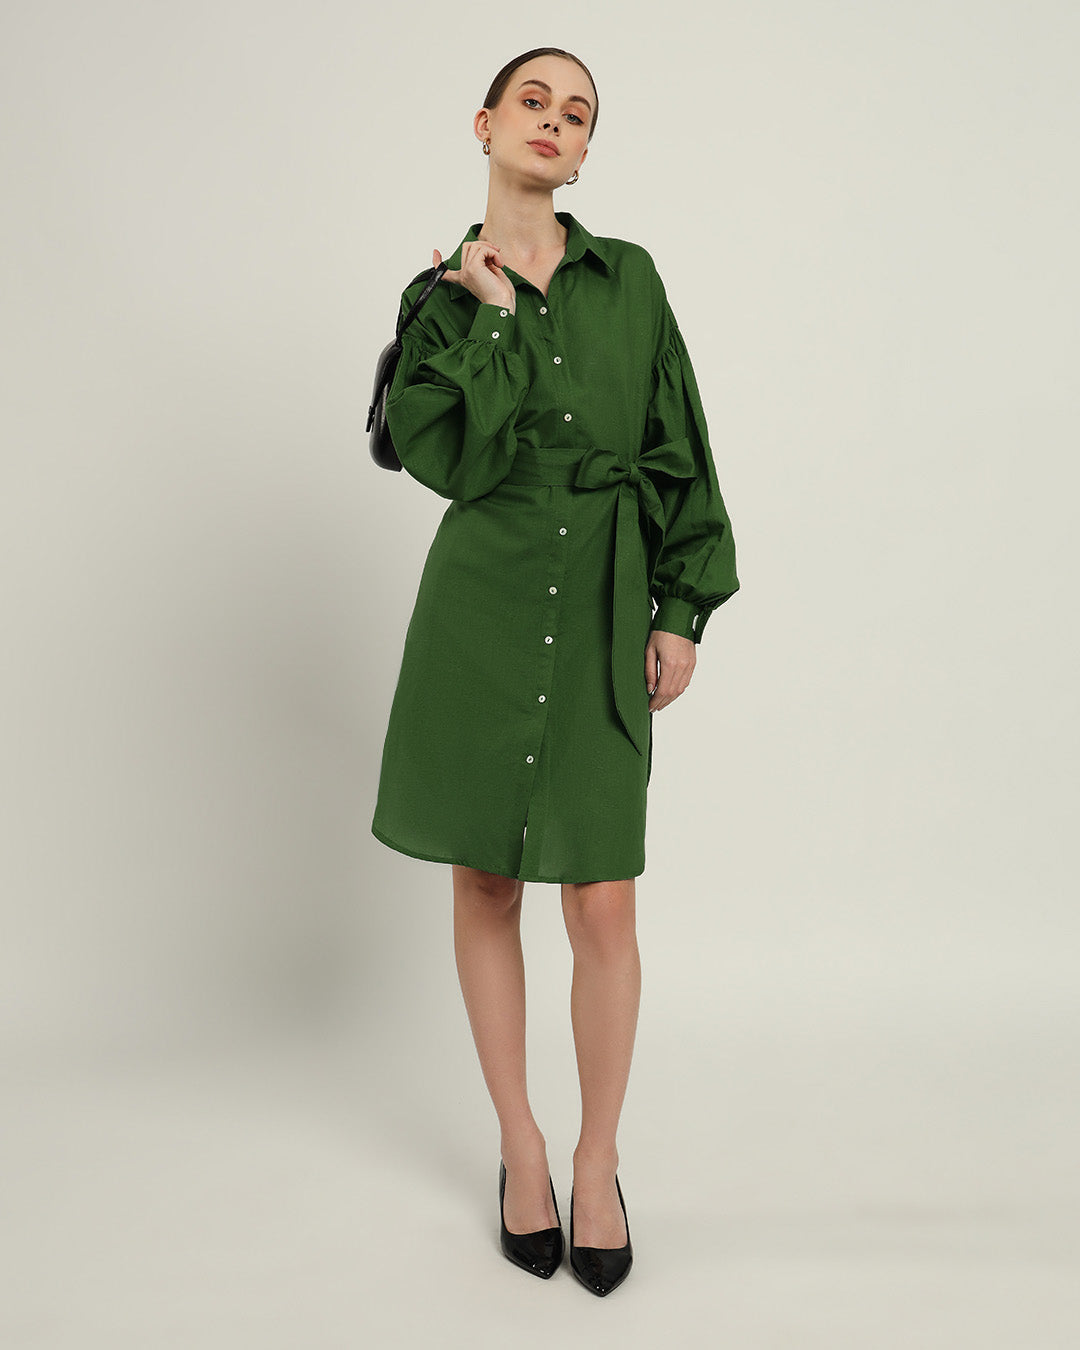 The Derby Emerald Cotton Dress